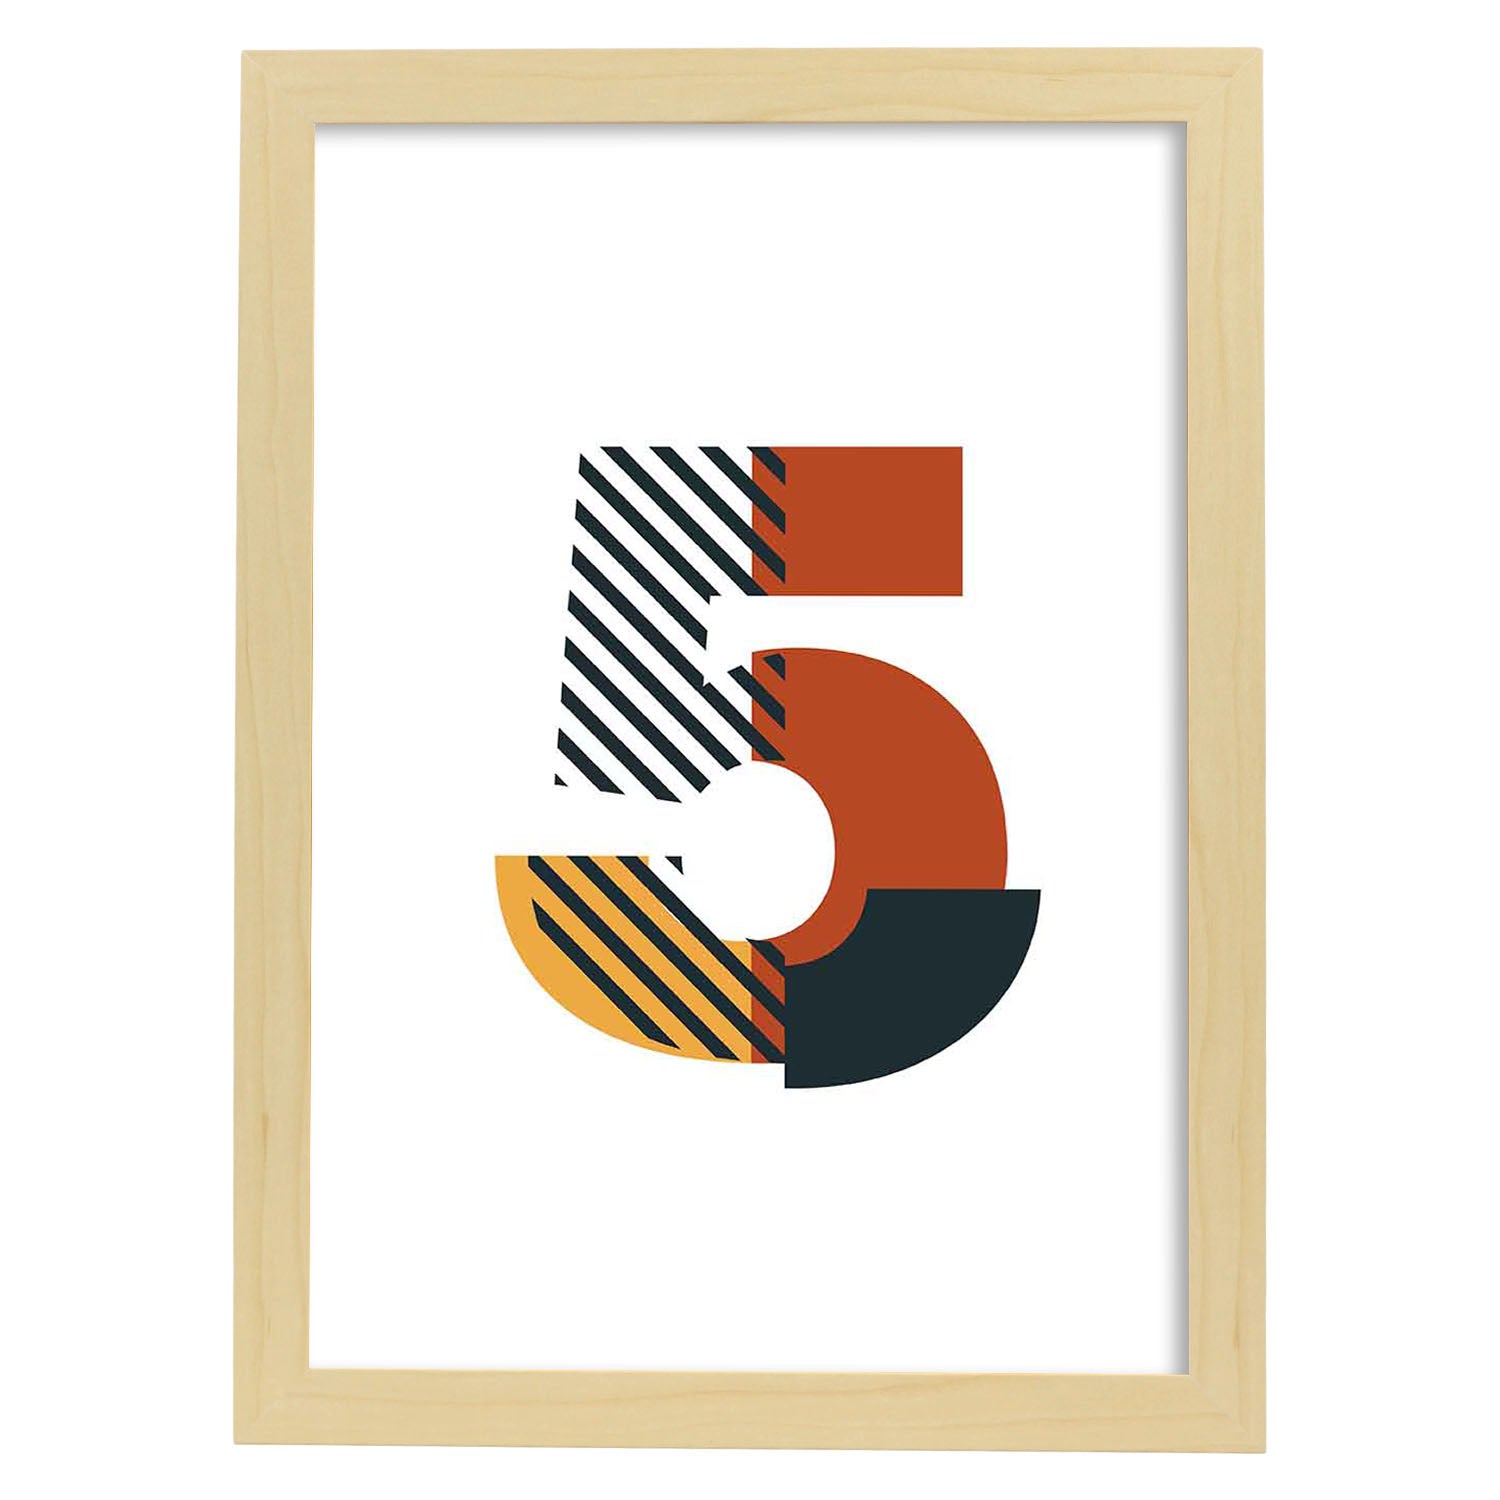 Poster de número 5. Lámina estilo Geometria con imágenes del alfabeto.-Artwork-Nacnic-A4-Marco Madera clara-Nacnic Estudio SL